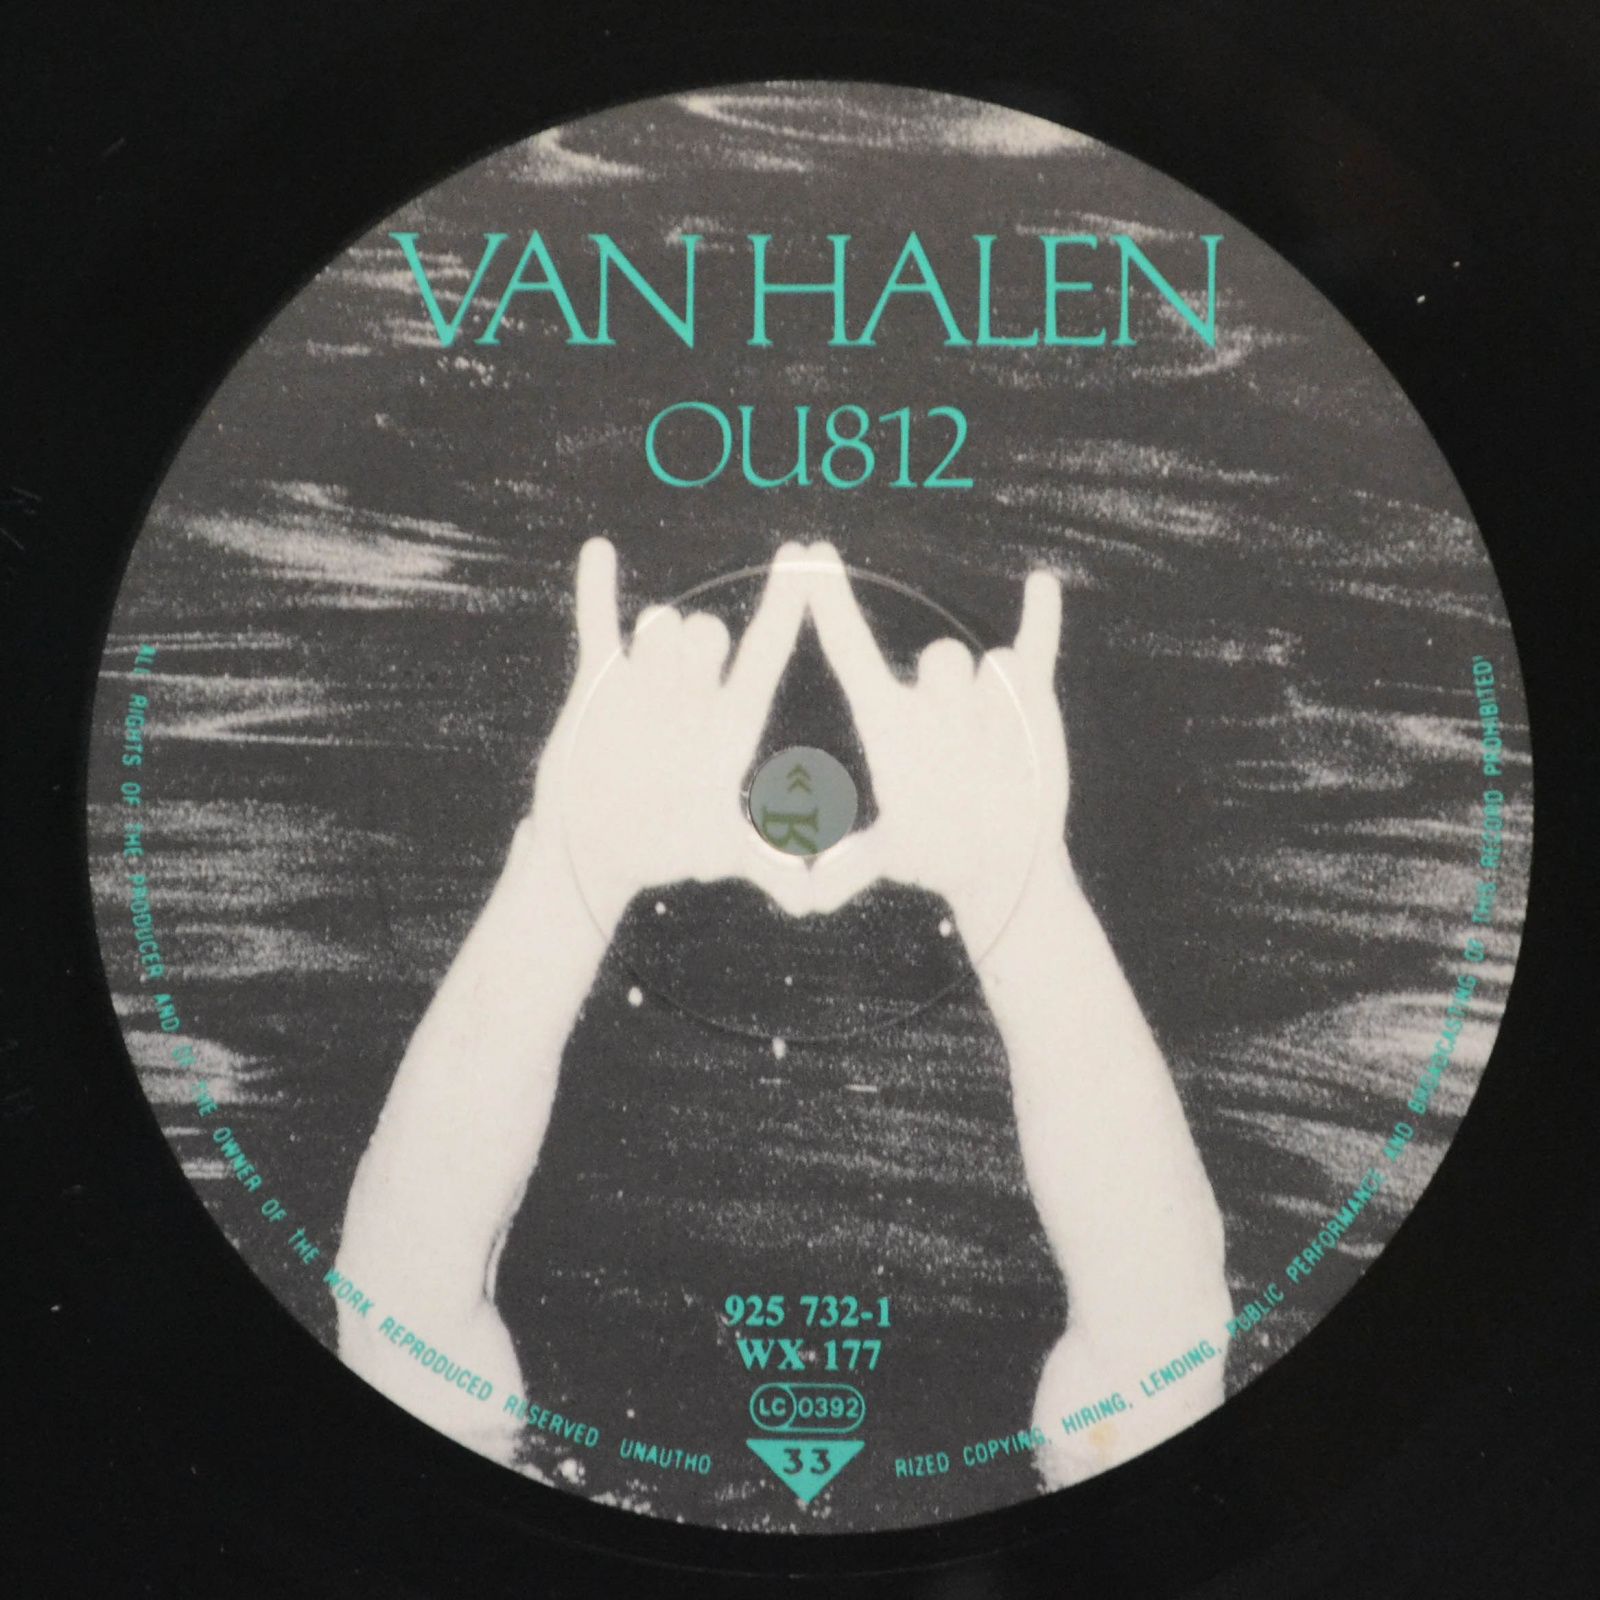 Van Halen — OU812, 1988